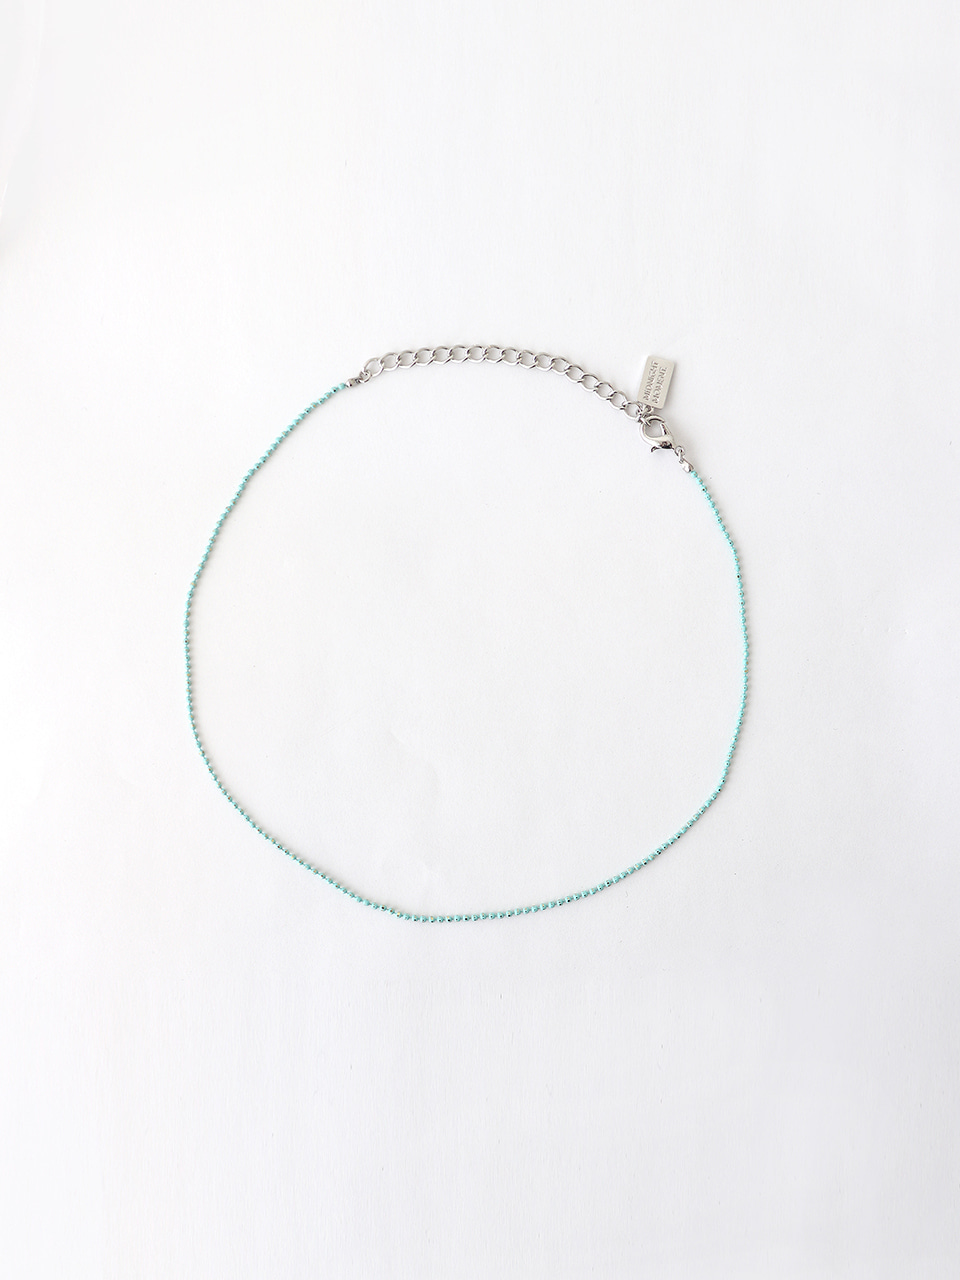 mint ball chain necklace (choker)